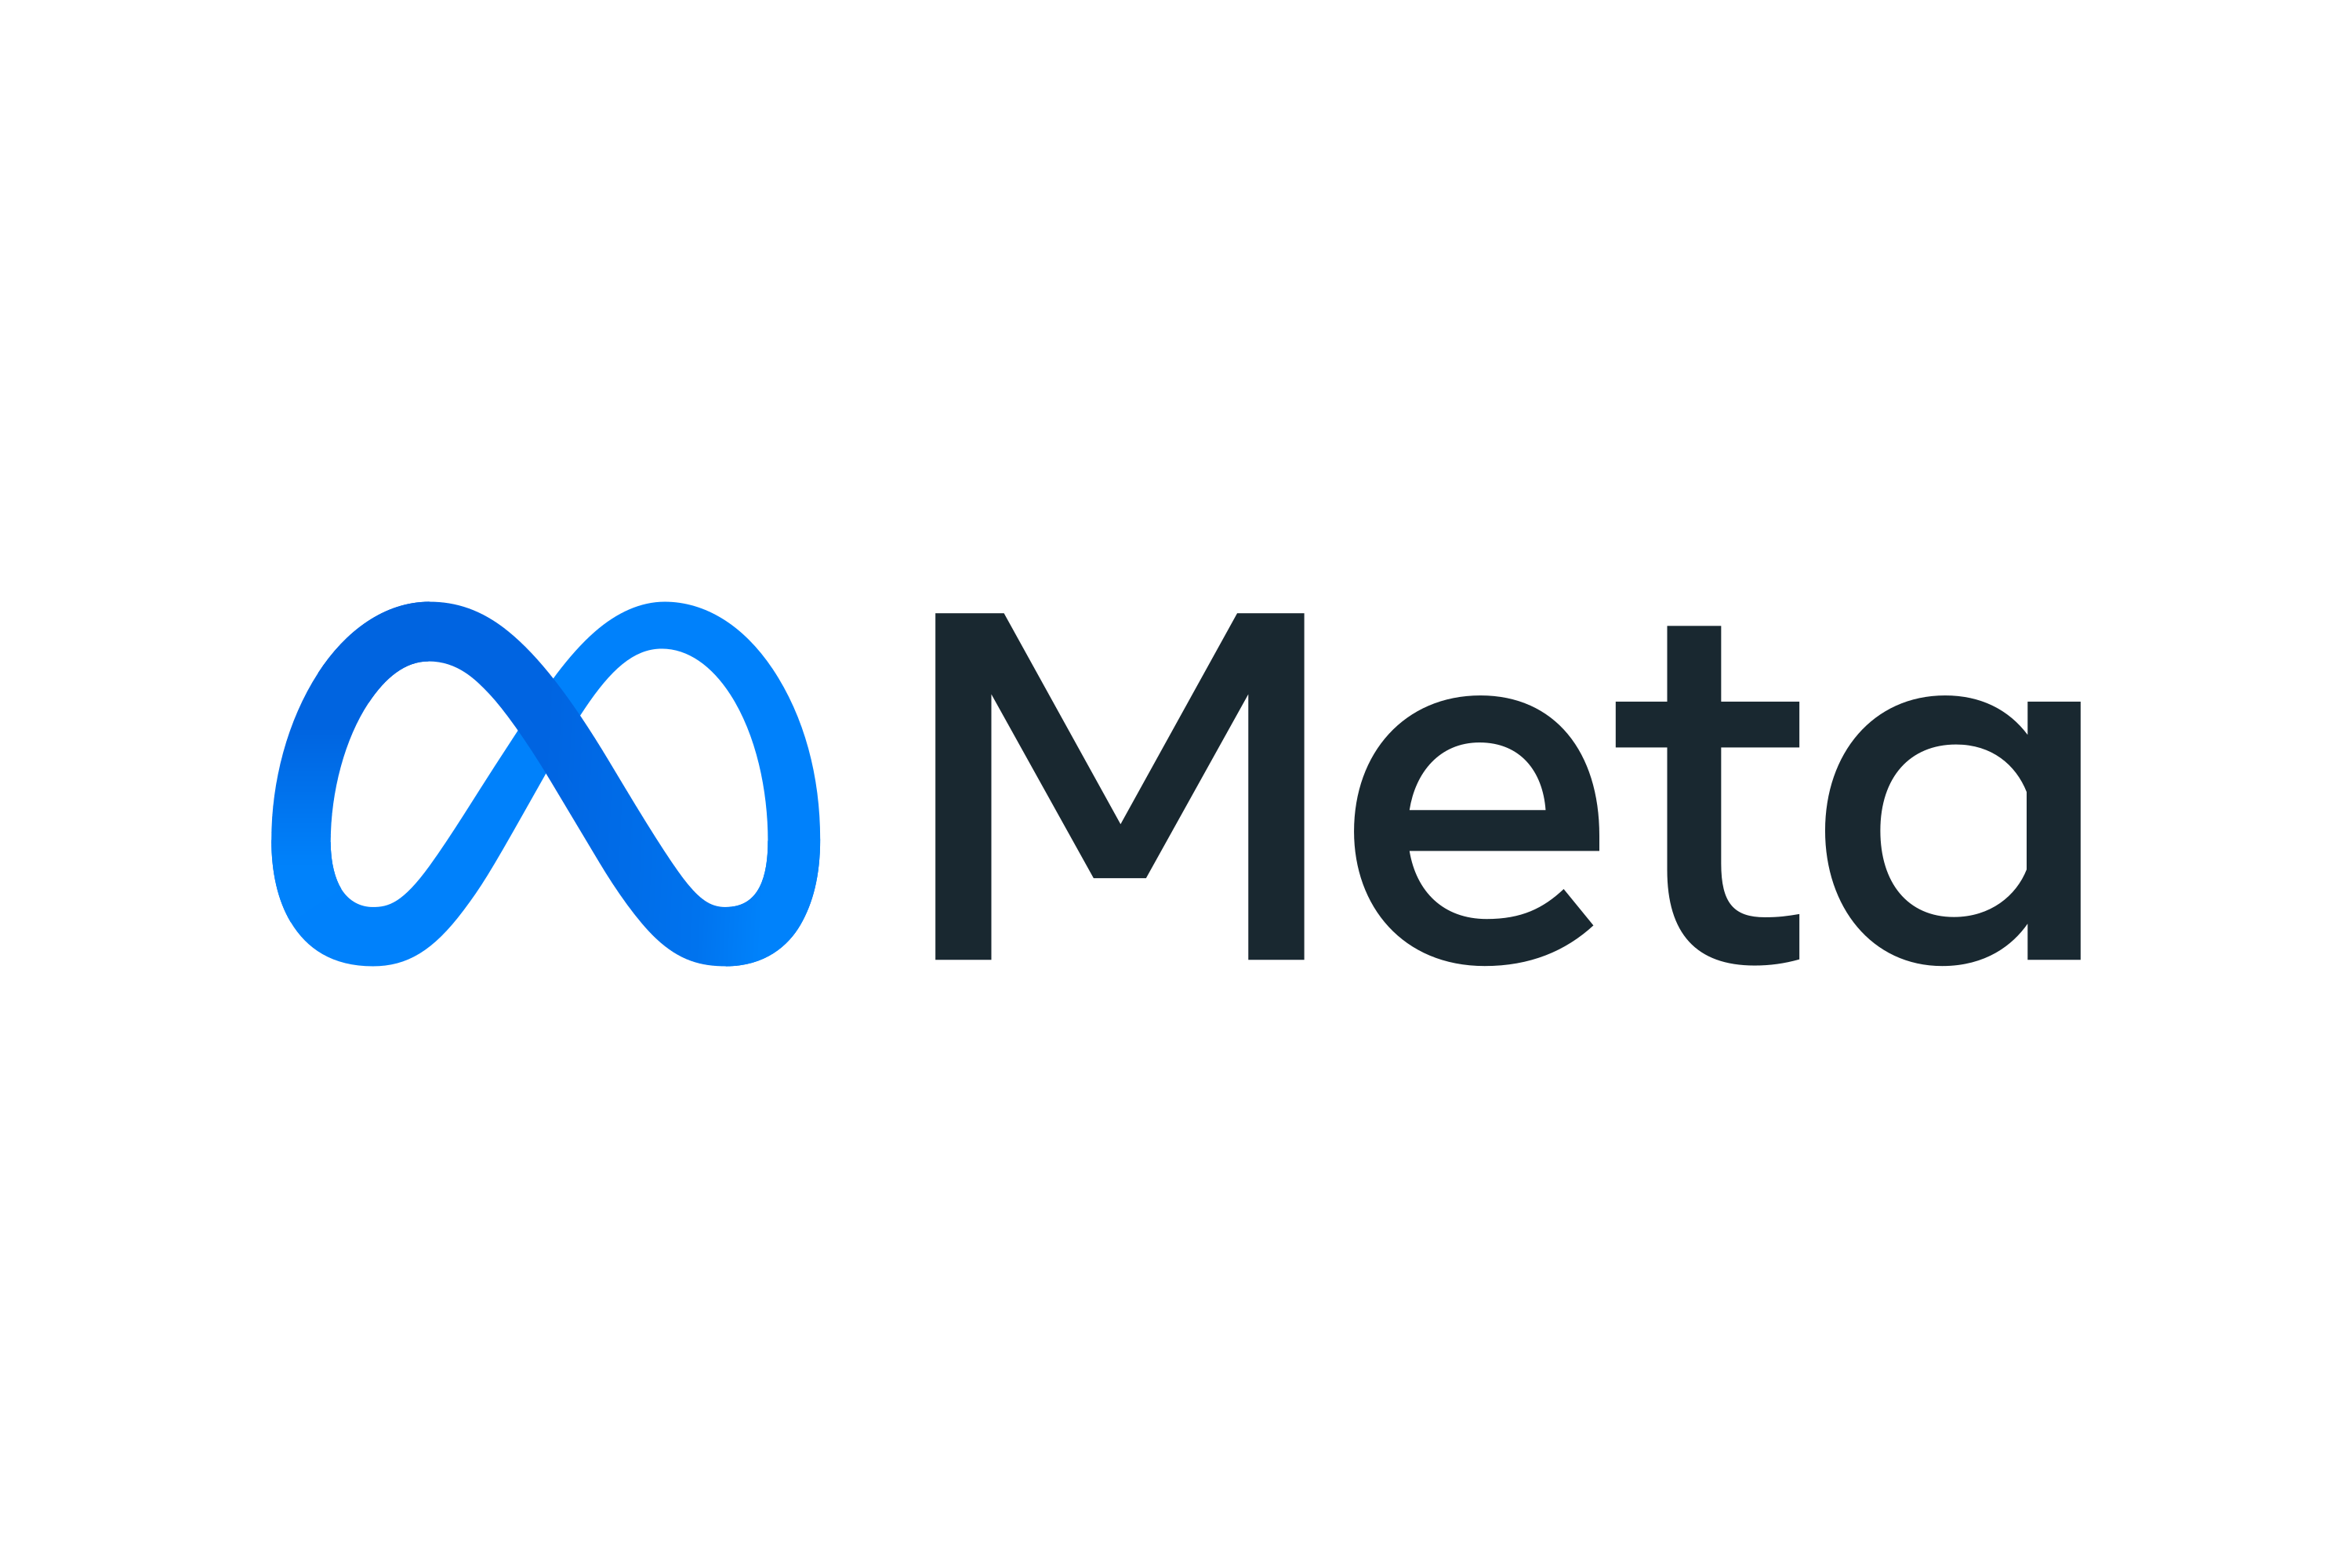 Download Meta Platforms Logo in SVG Vector or PNG File Format - Logo.wine